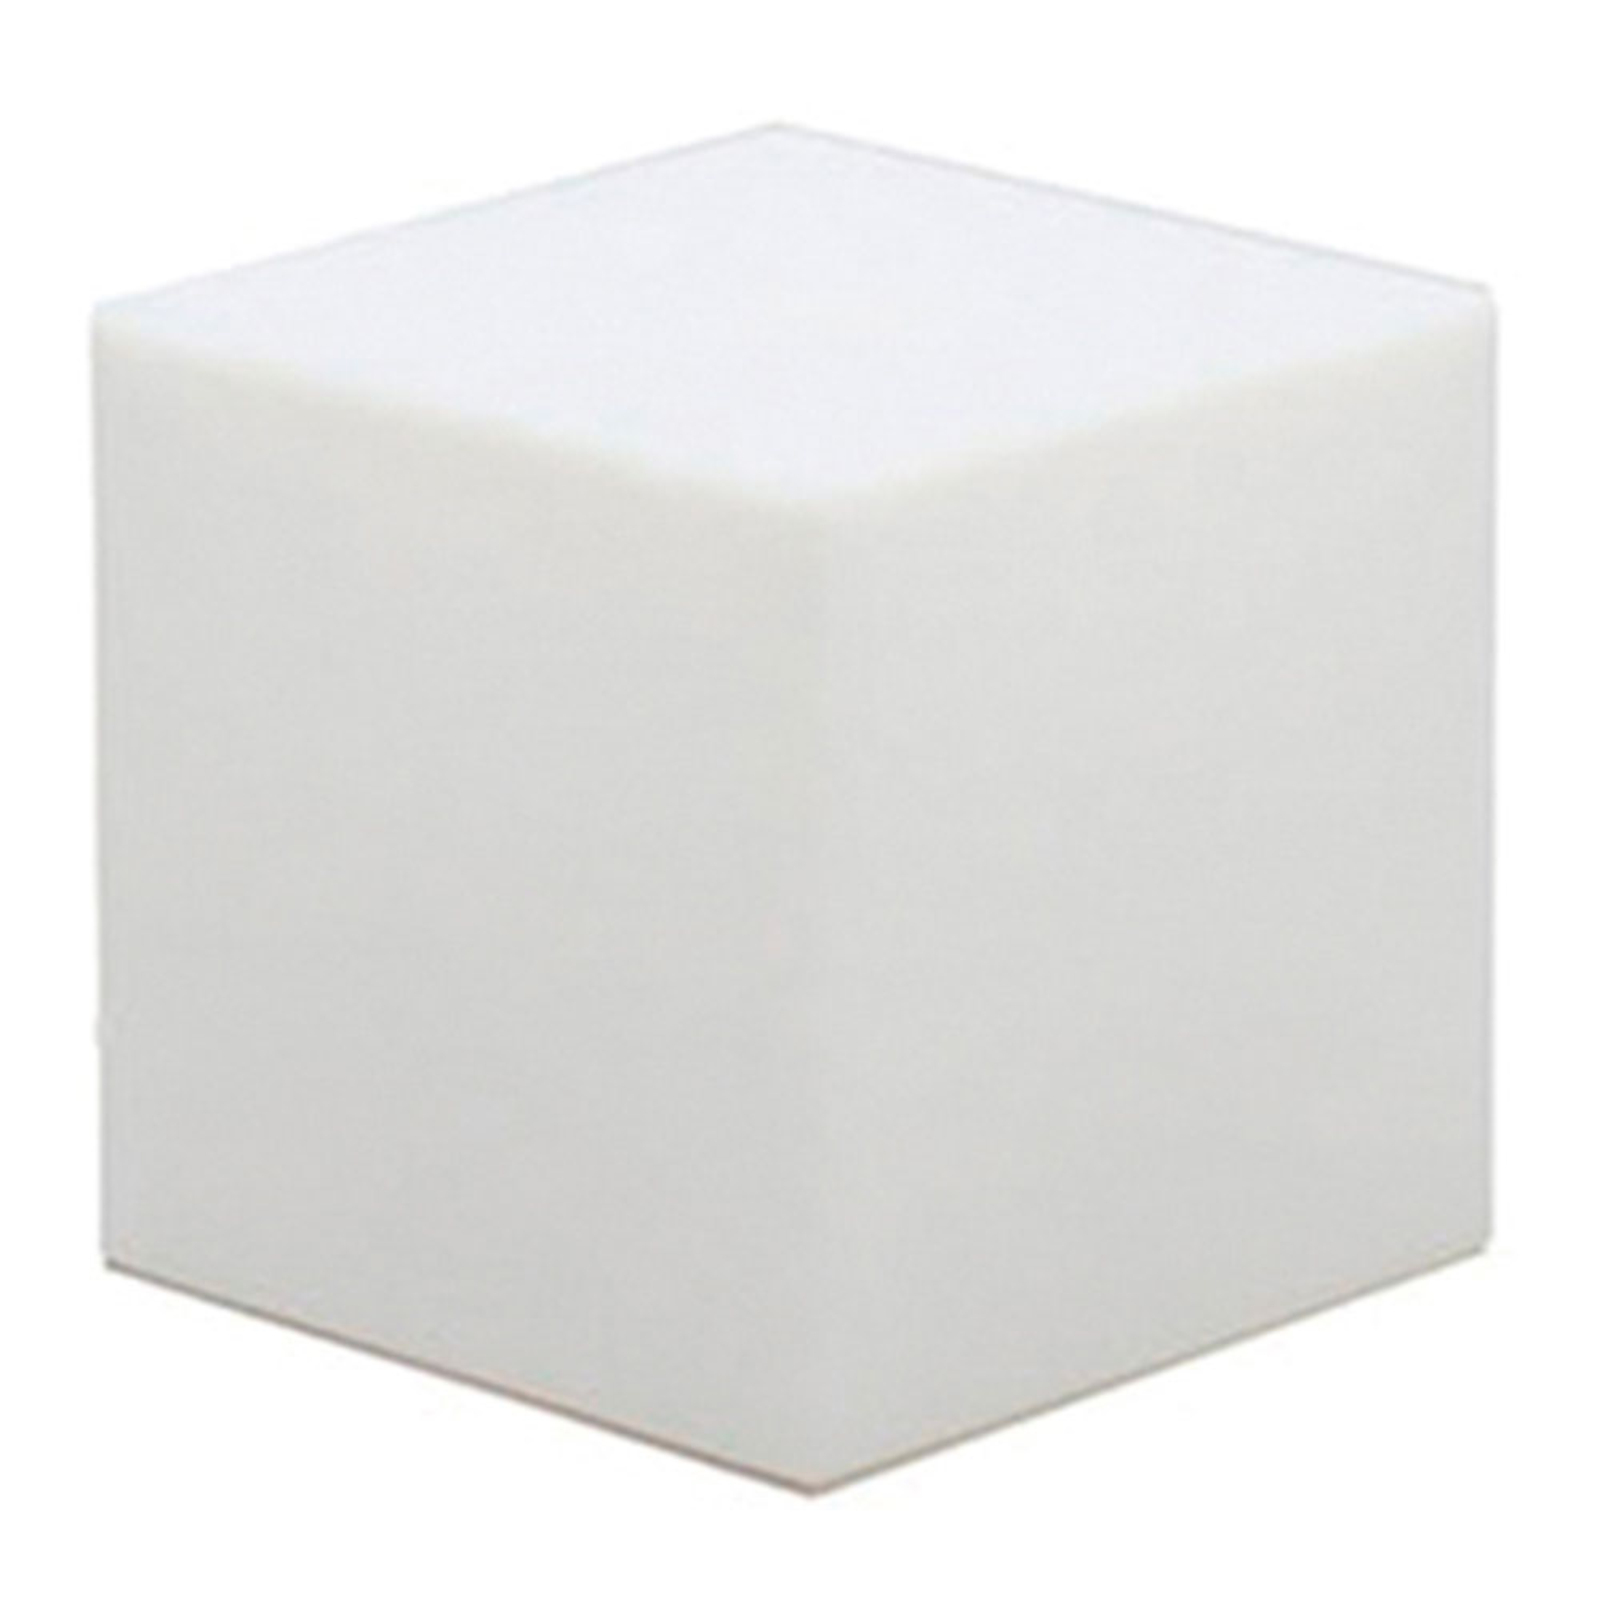 Cuby cubo luminoso decorativo Newgarden altura 20cm